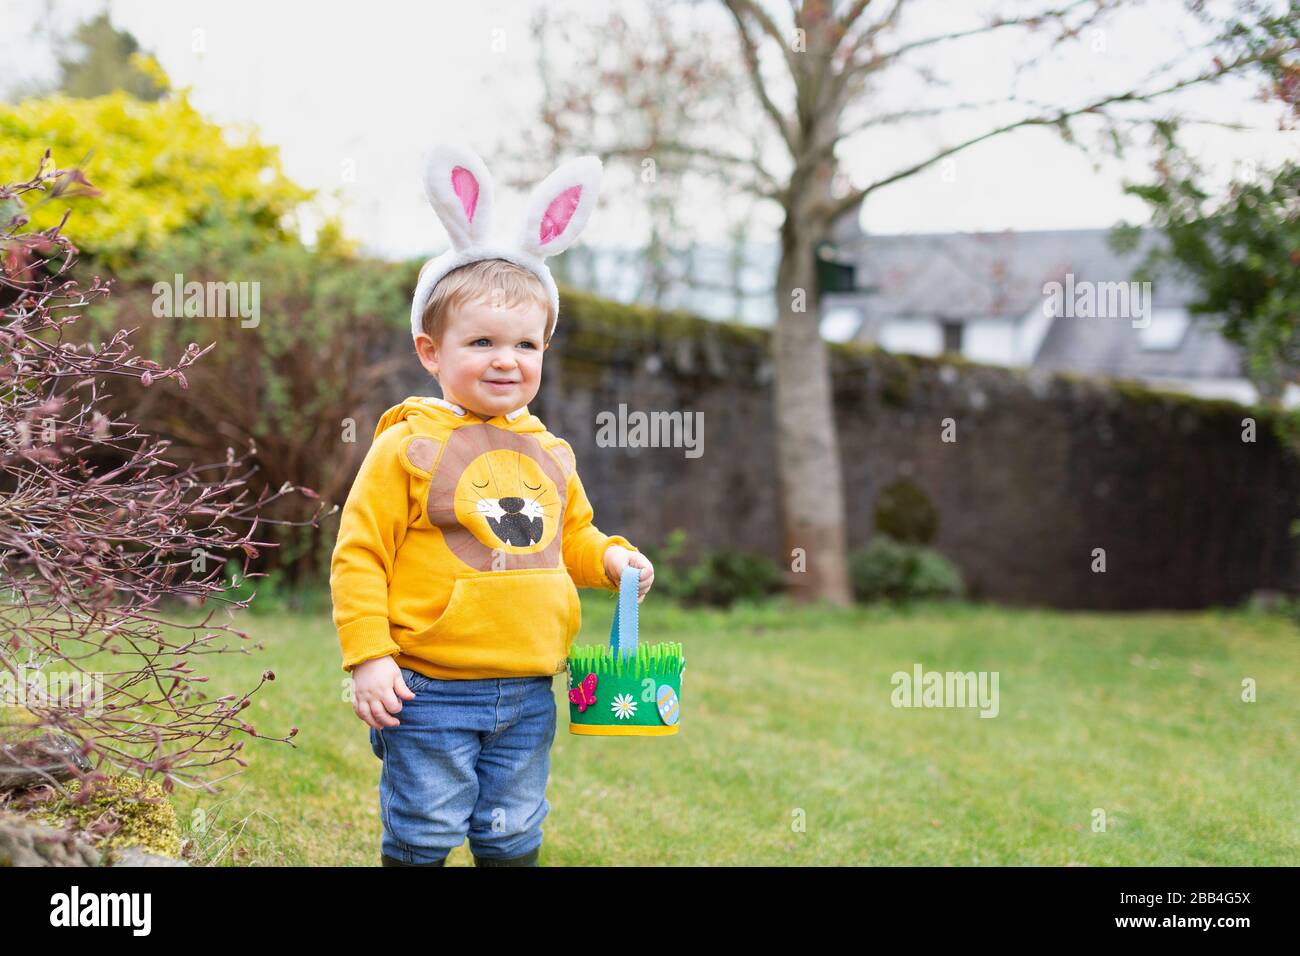 Boy outside in garden wearing bunny ears for Easter egg hunt, Scotland, UK Stock Photo